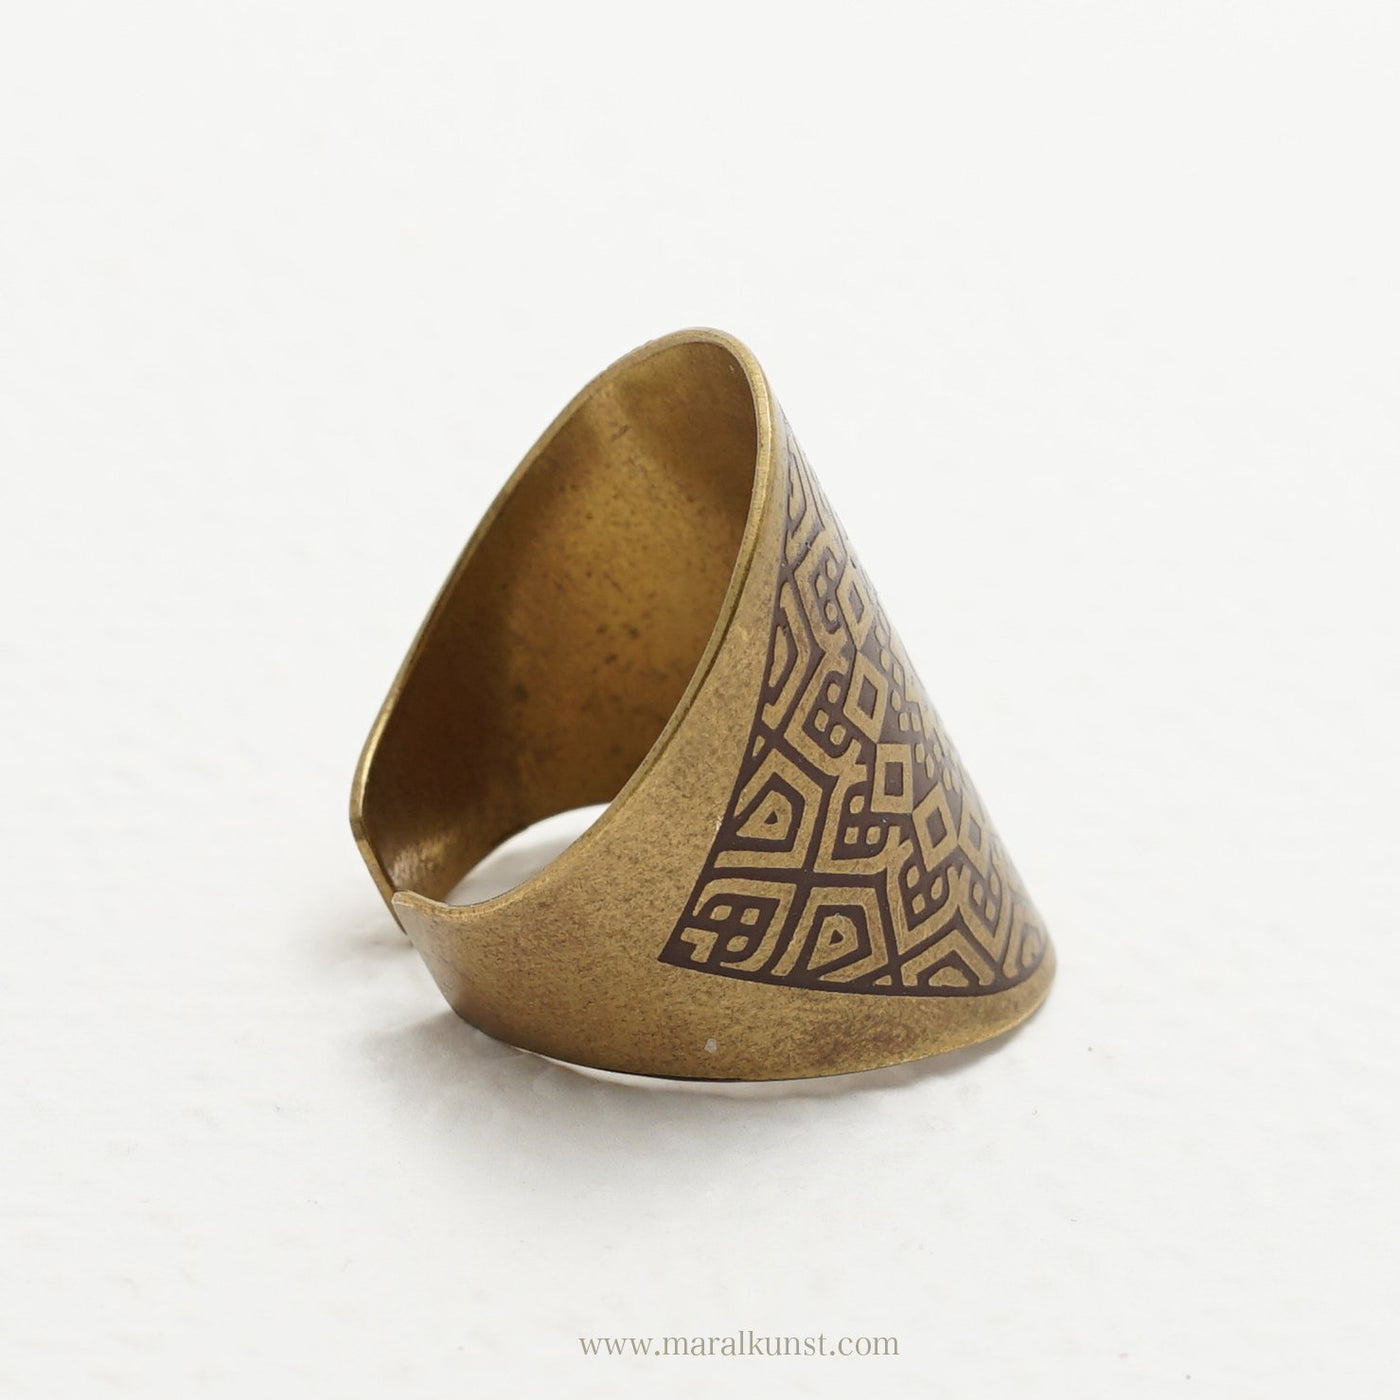 Geometric Pattern Ring - Maral Kunst Jewelry